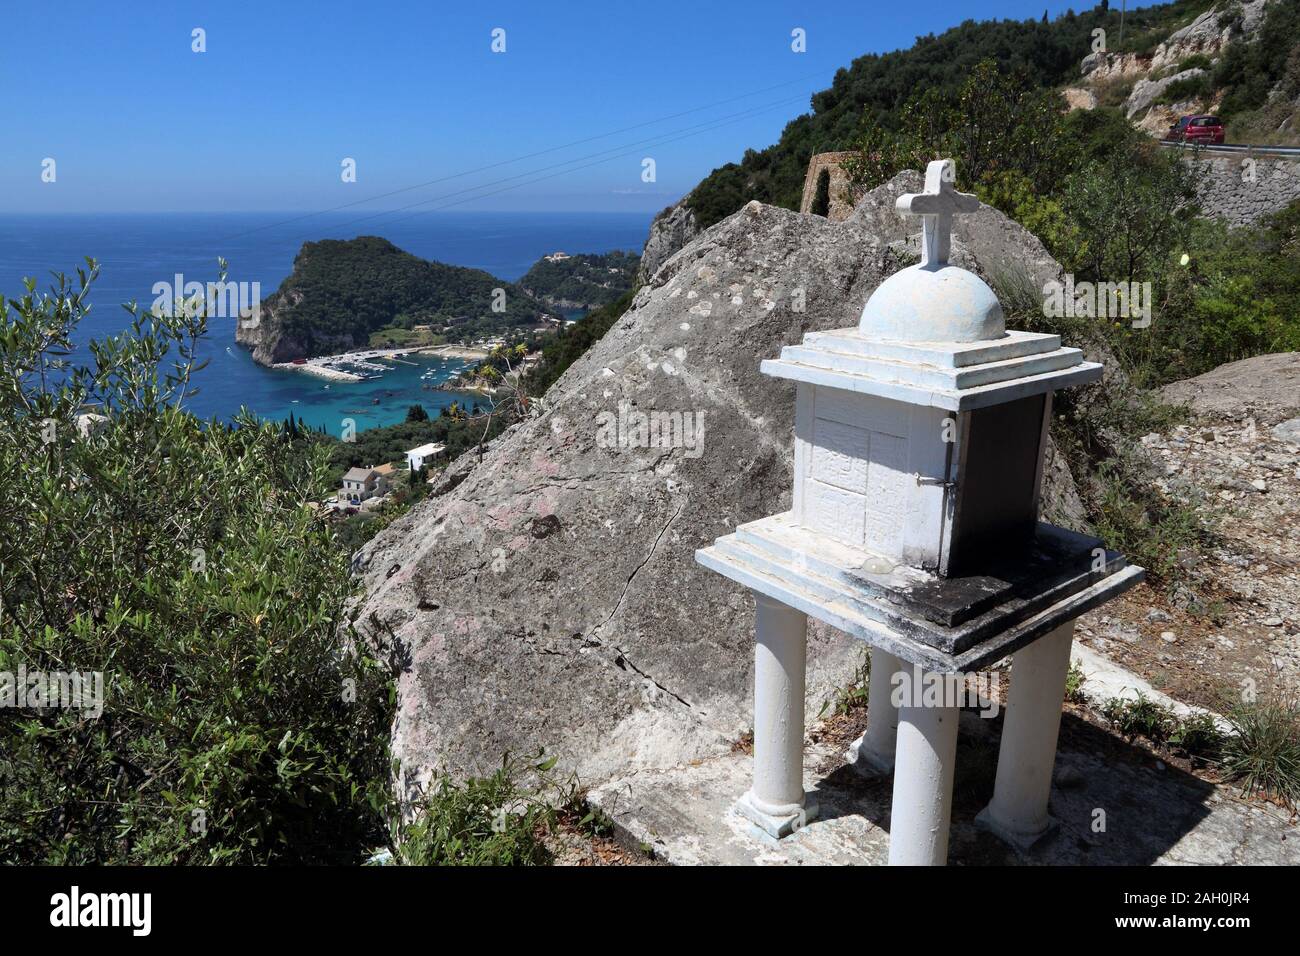 Greek island landscape. Paleokastritsa on Corfu island, Greece. Ionian Sea coast in summer. Stock Photo